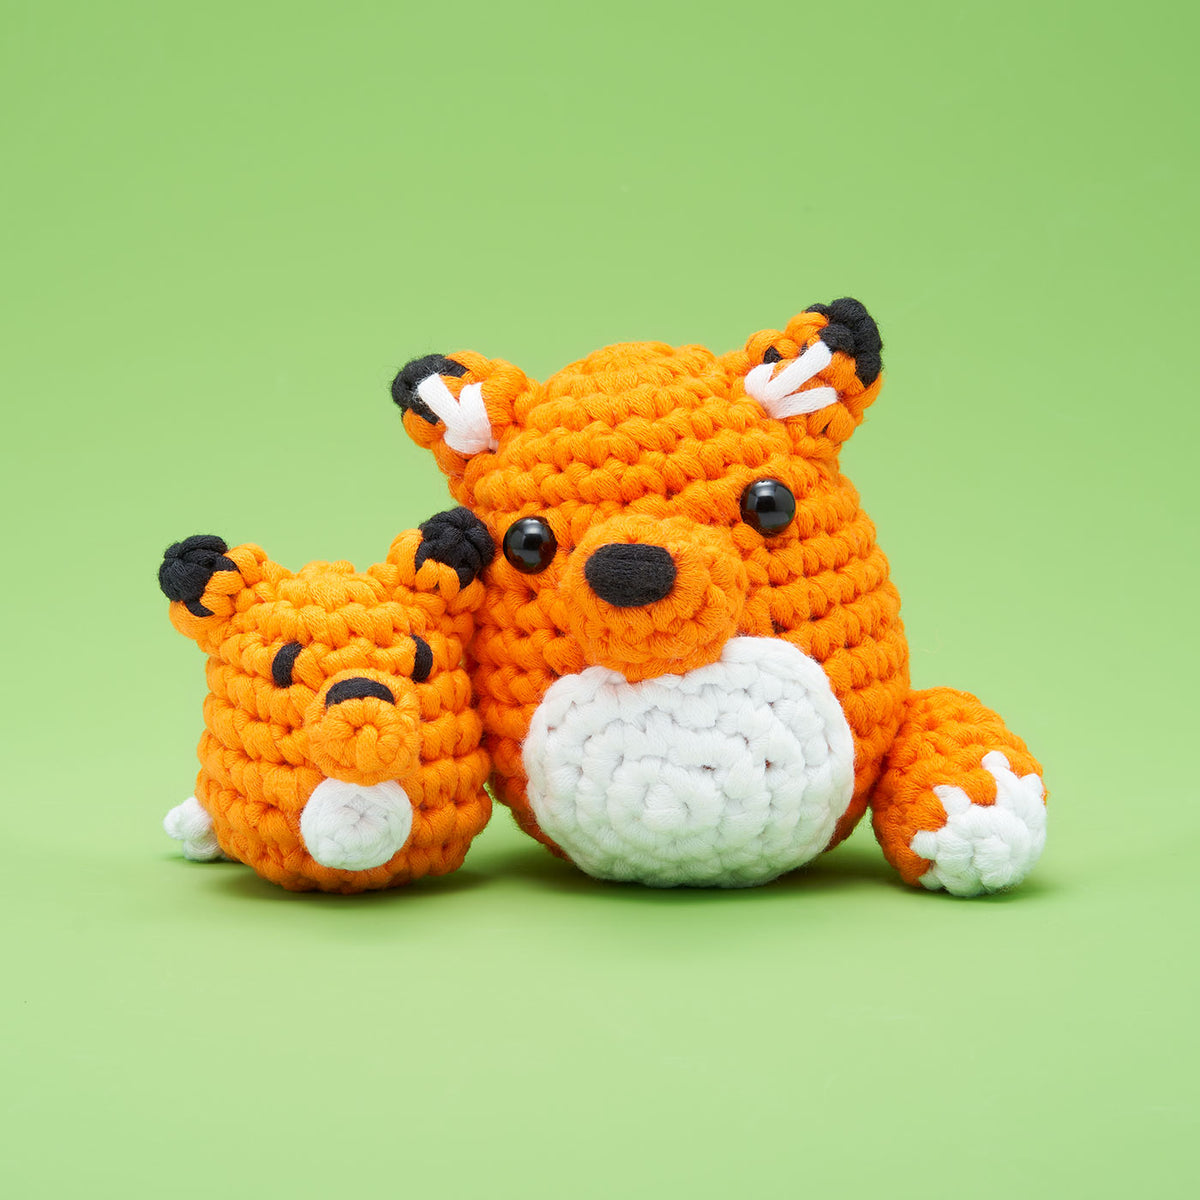 The Woobles Crochet Kit - Felix the Fox – DART Boutique